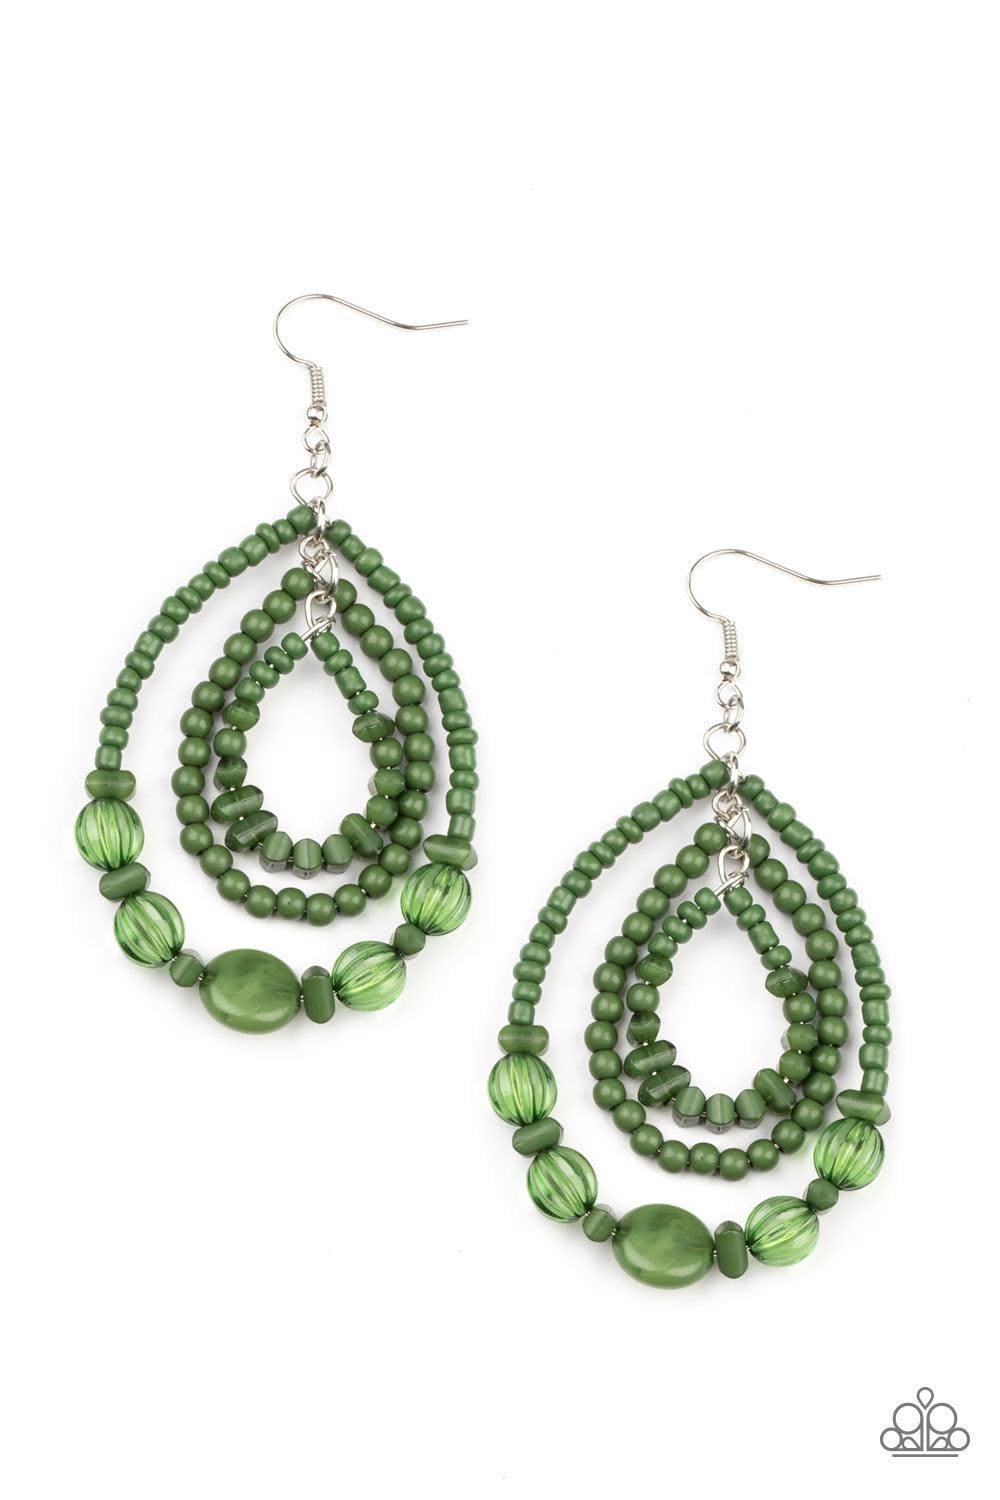 Paparazzi Accessories - Prana Party - Green Earrings - Bling by JessieK